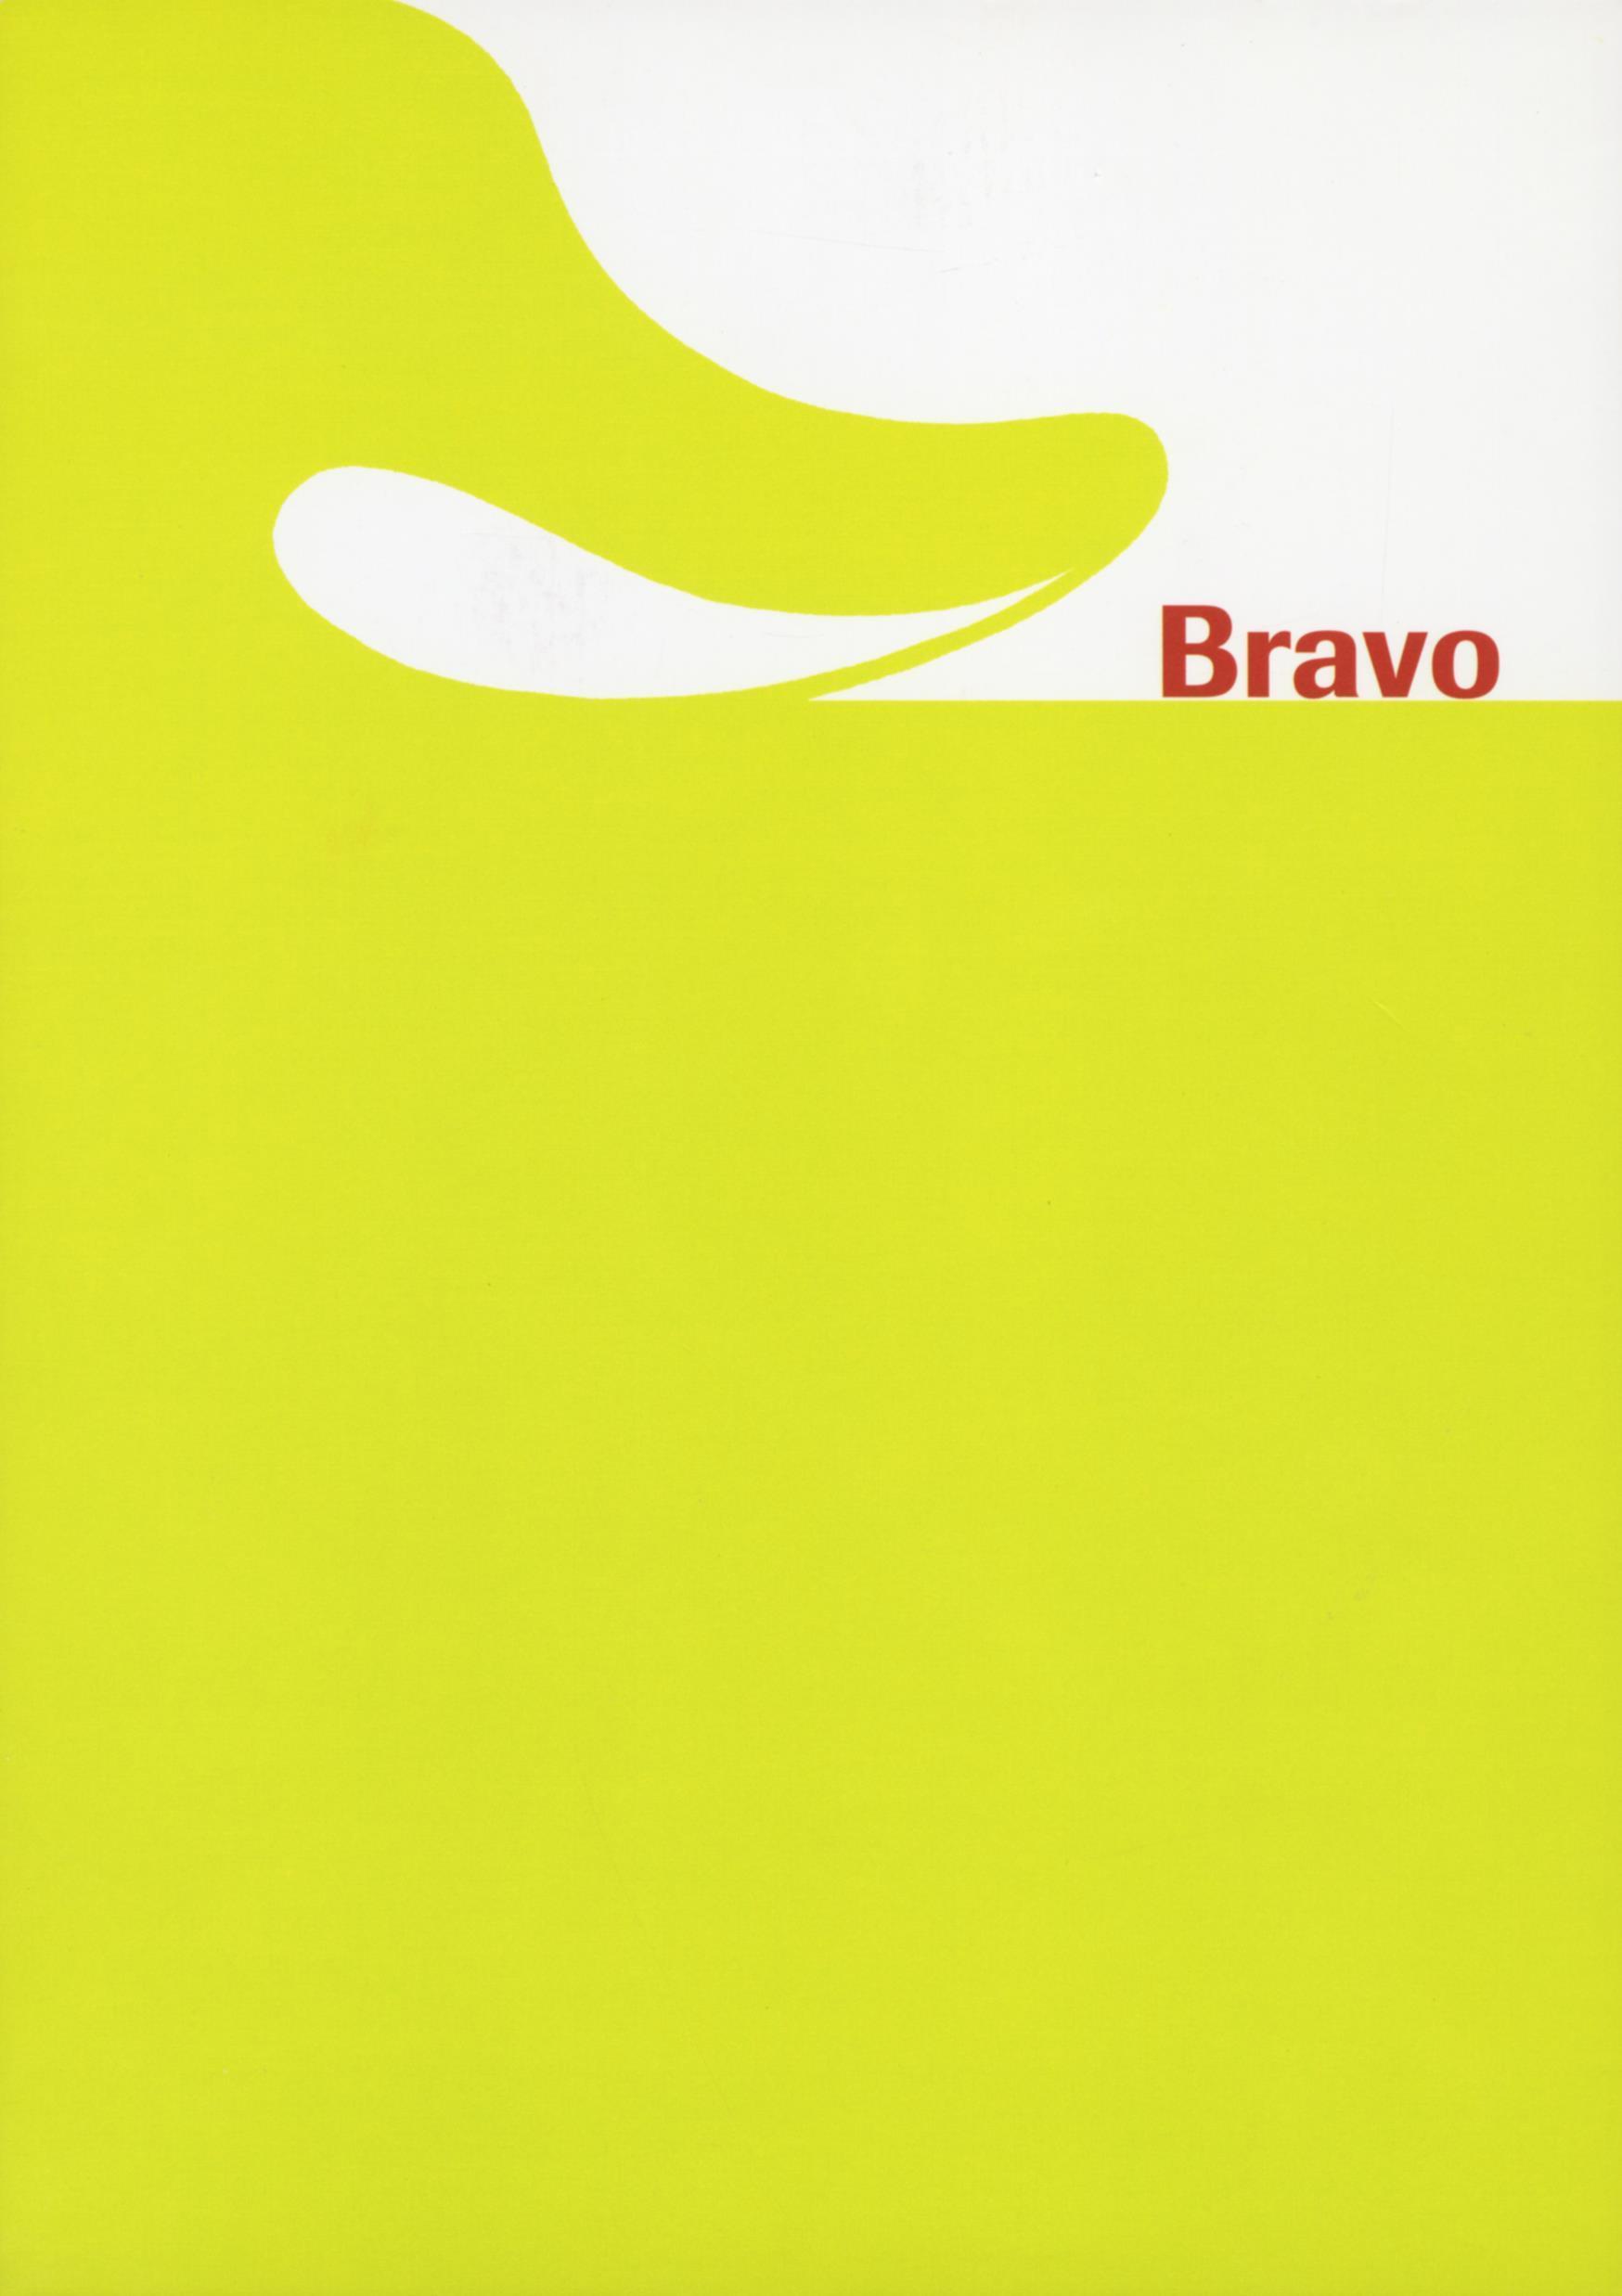 Joaquim Bravo